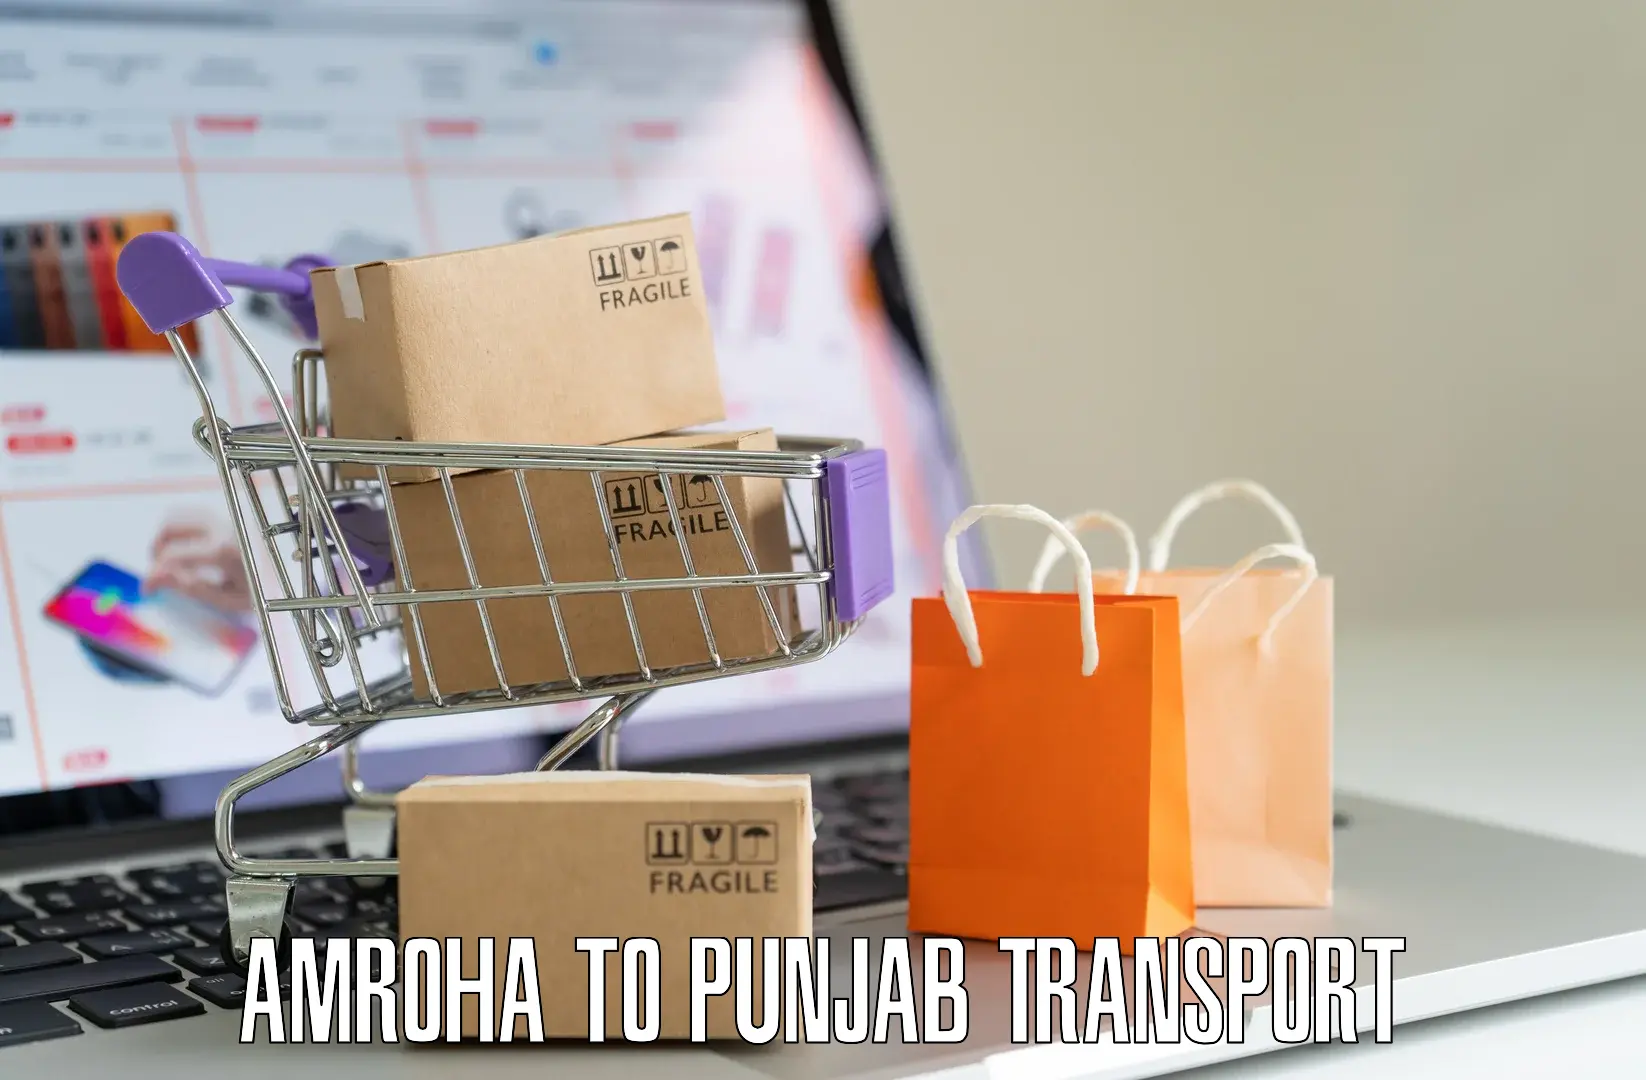 Transport shared services Amroha to Batala